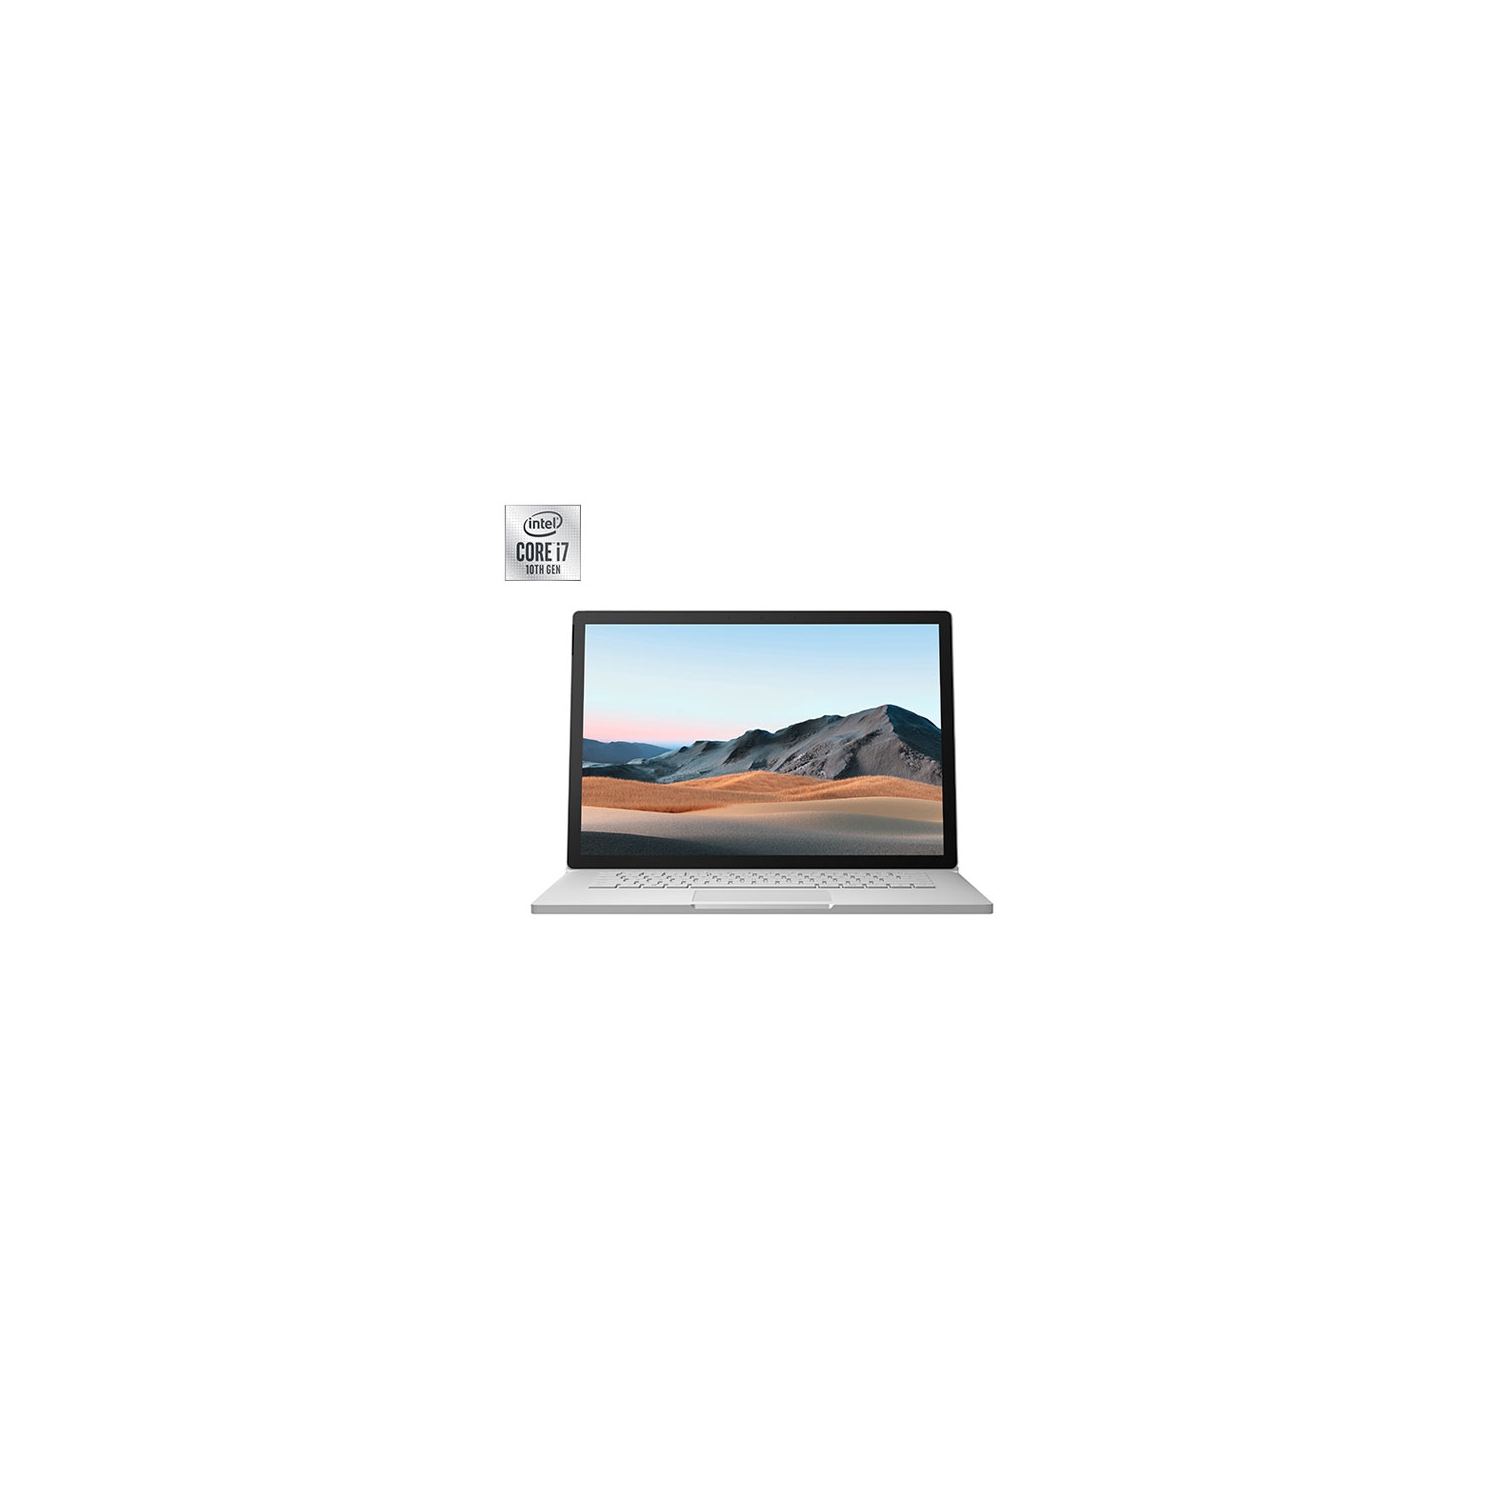 Microsoft Surface Book 3 15" 2-in-1 Laptop - Platinum (Intel Ci7-1065G7/512GB SSD/32GB RAM) - English - Open Box